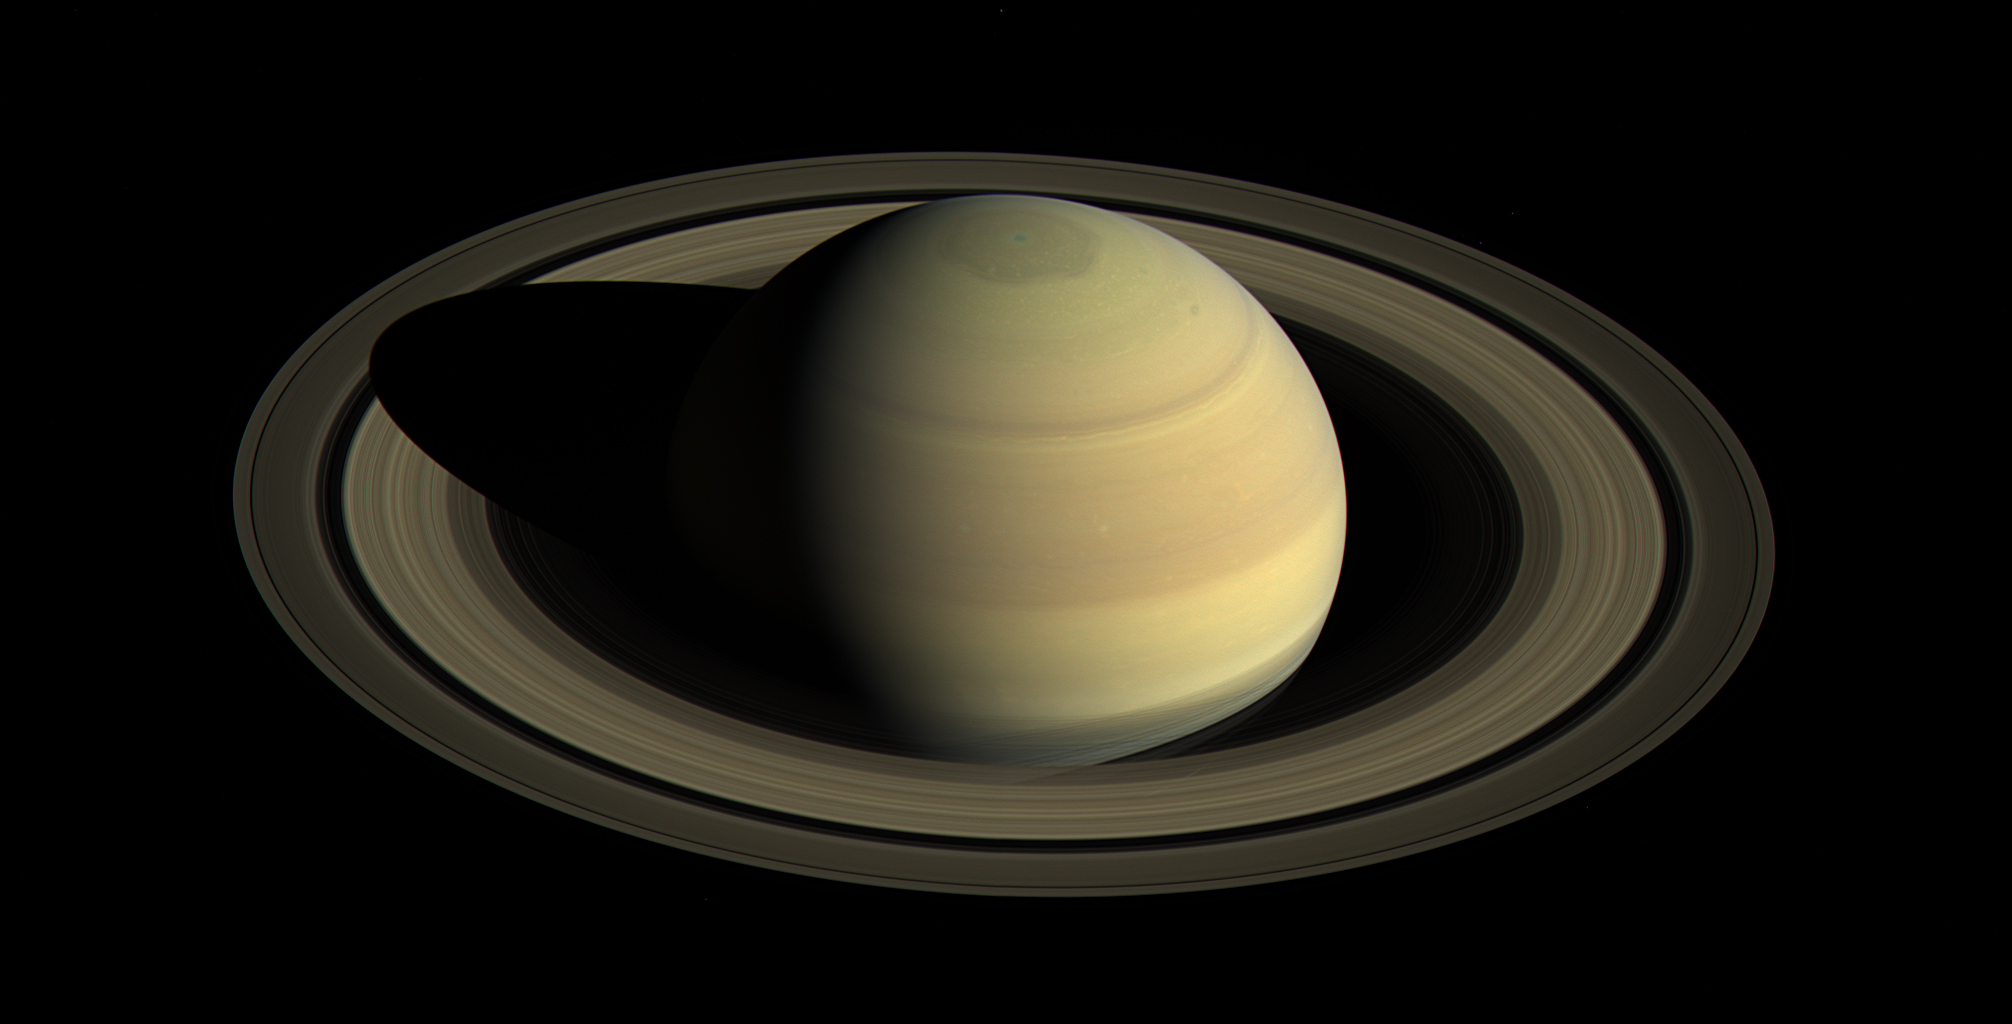 Астрофизики записали саундтрек из звуков колец Сатурна